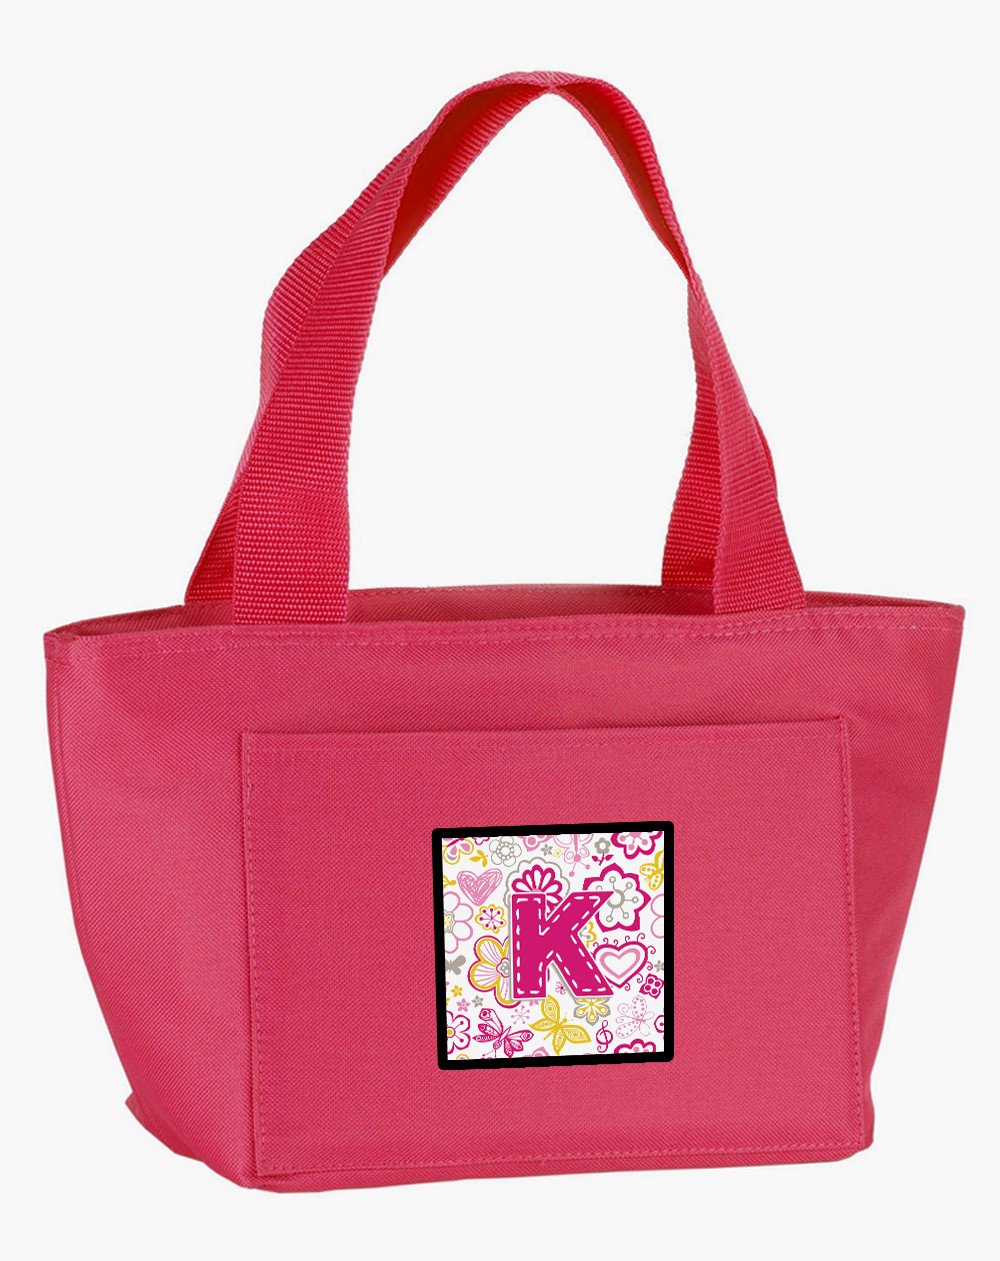 Letter K Flowers and Butterflies Pink Lunch Bag CJ2005-KPK-8808 by Caroline's Treasures